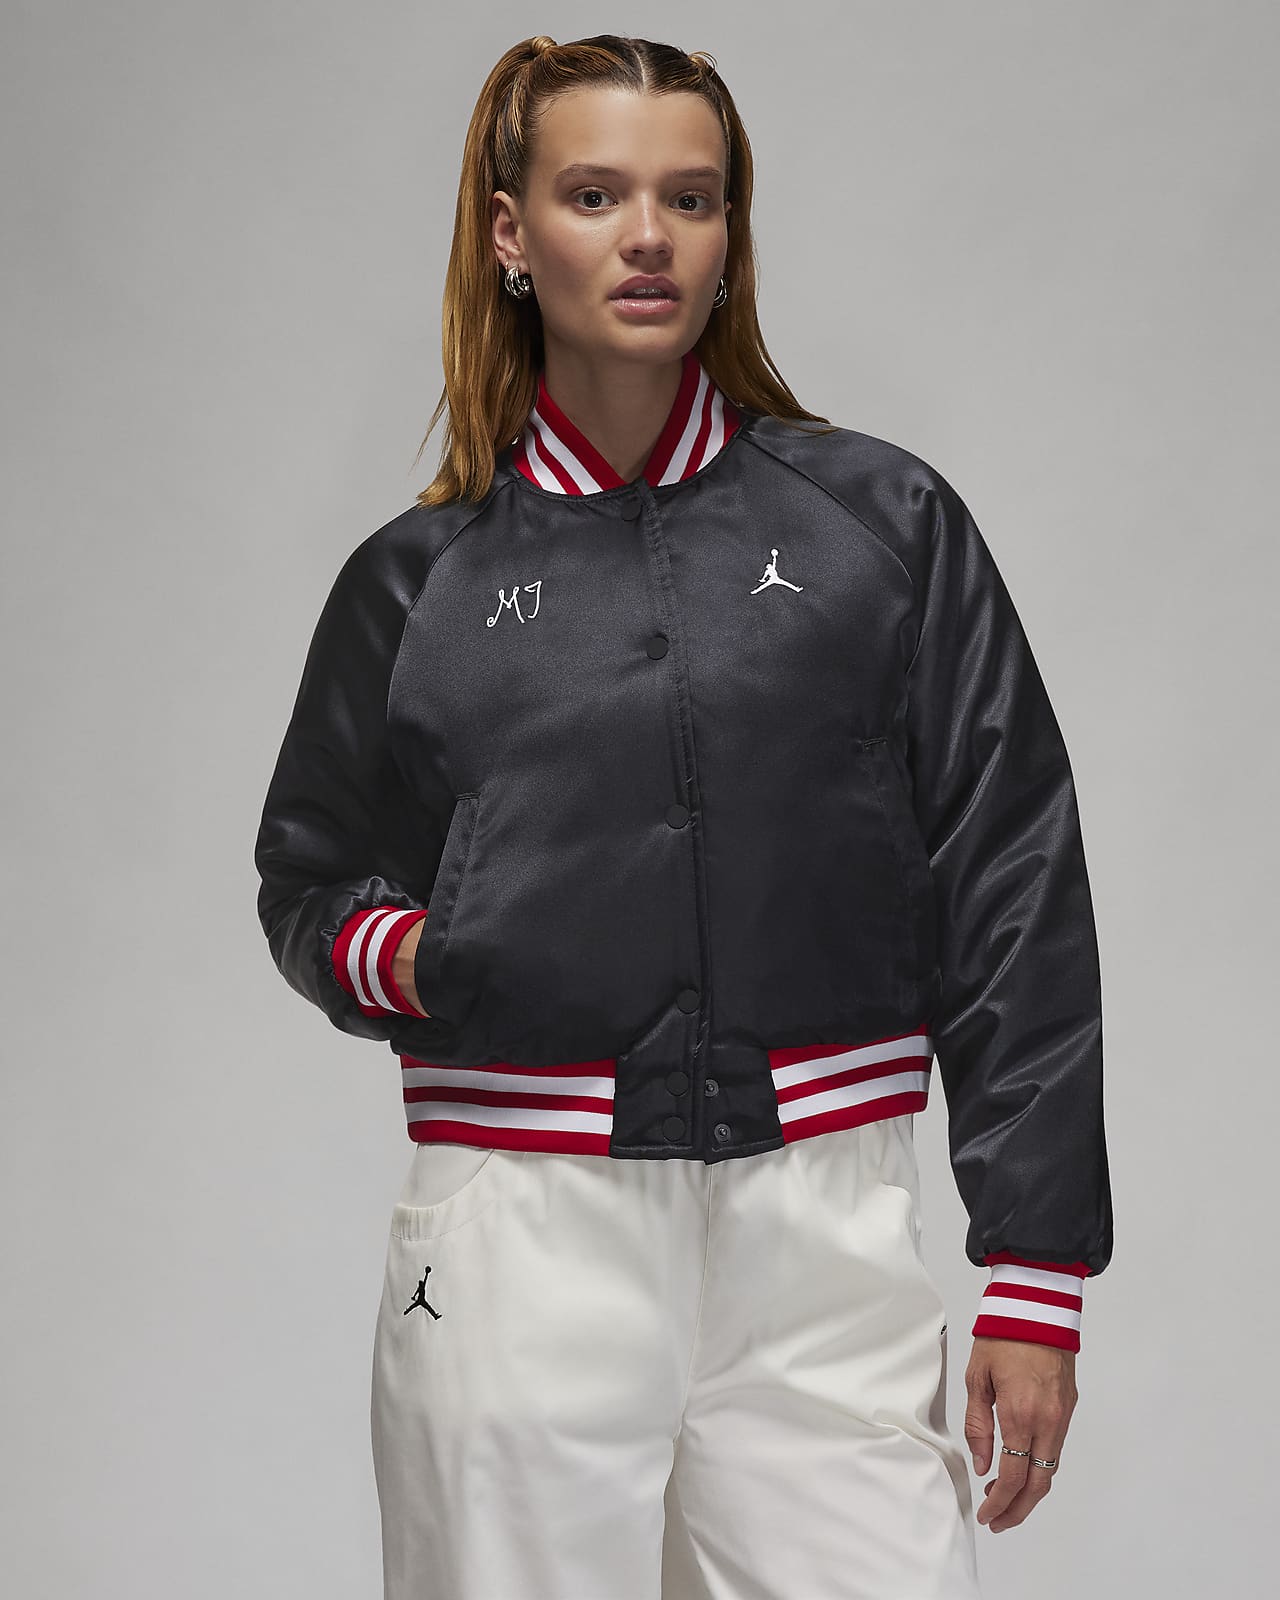 NWT $140 Nike Jordan Women Varsity Essentials Flight Suit XS Jumpsuit